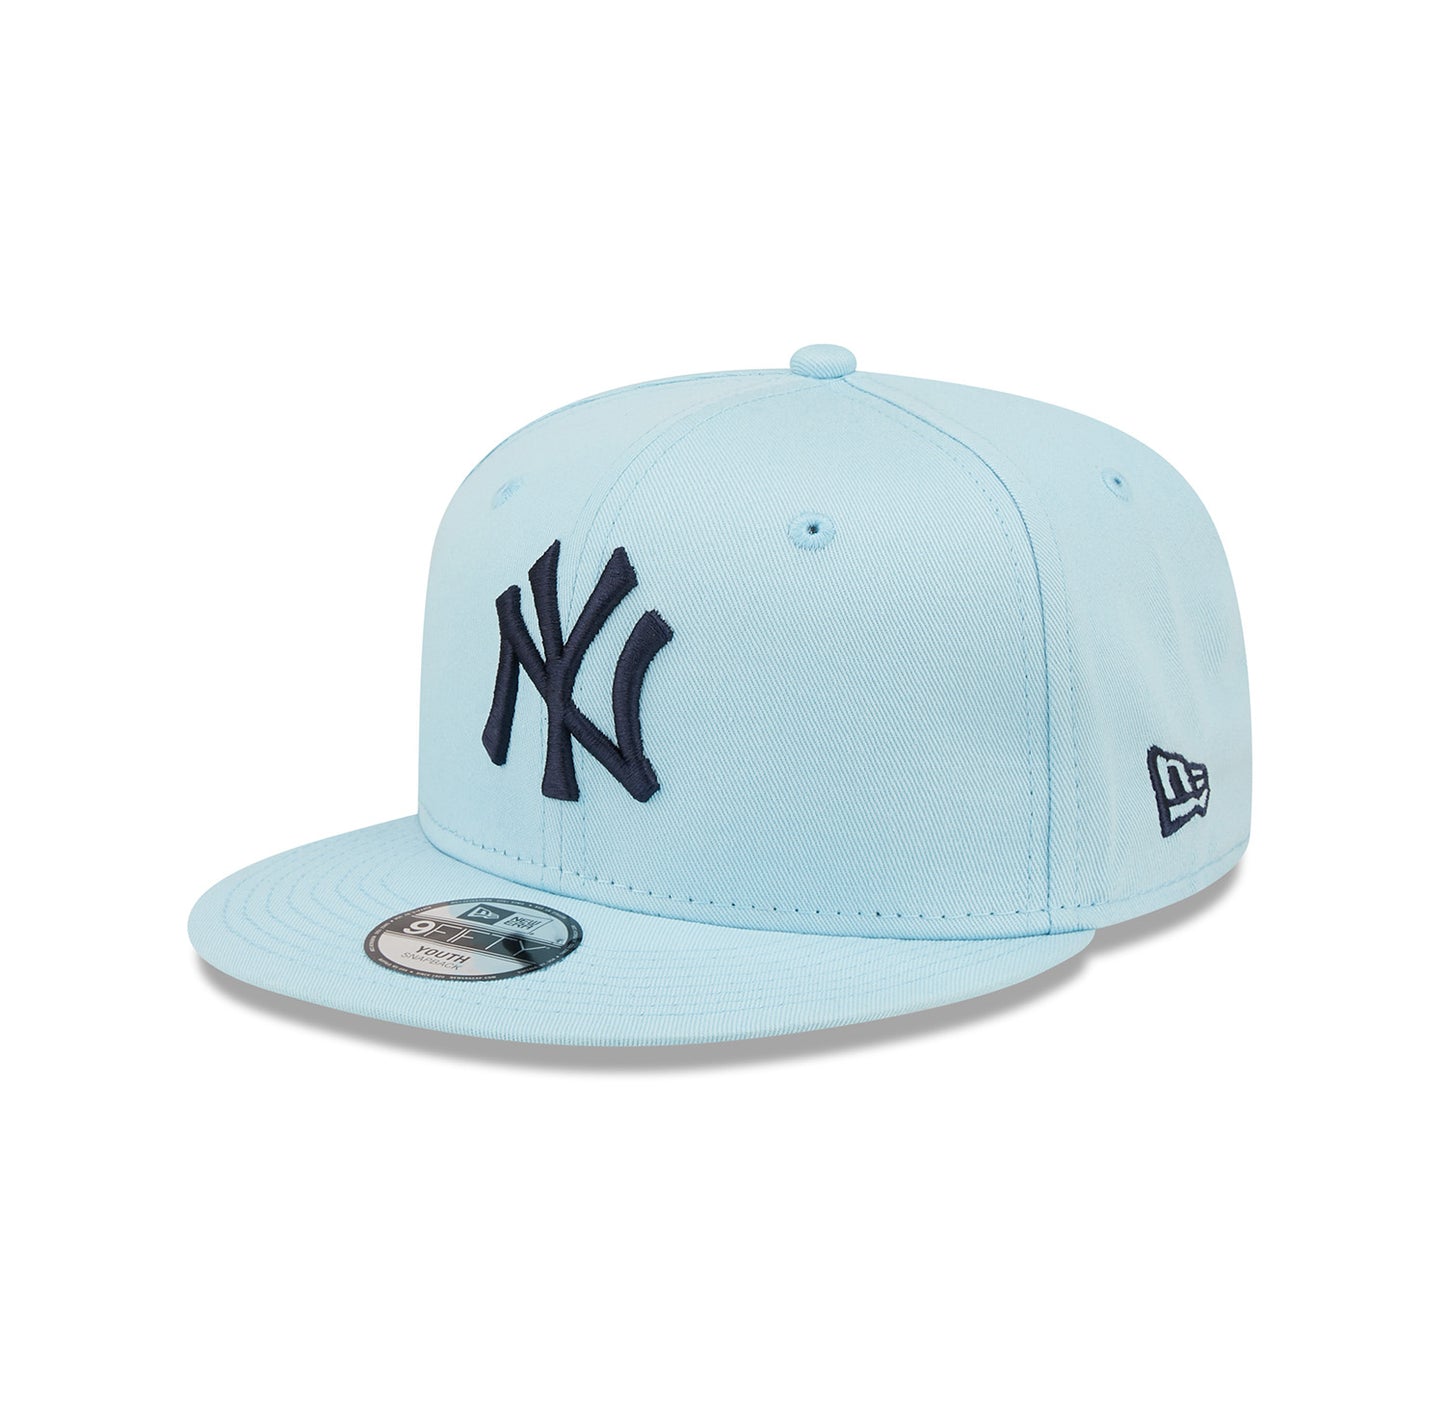 New Yankees New Era 9Fifty YOUTH Snap back Cap sky blue